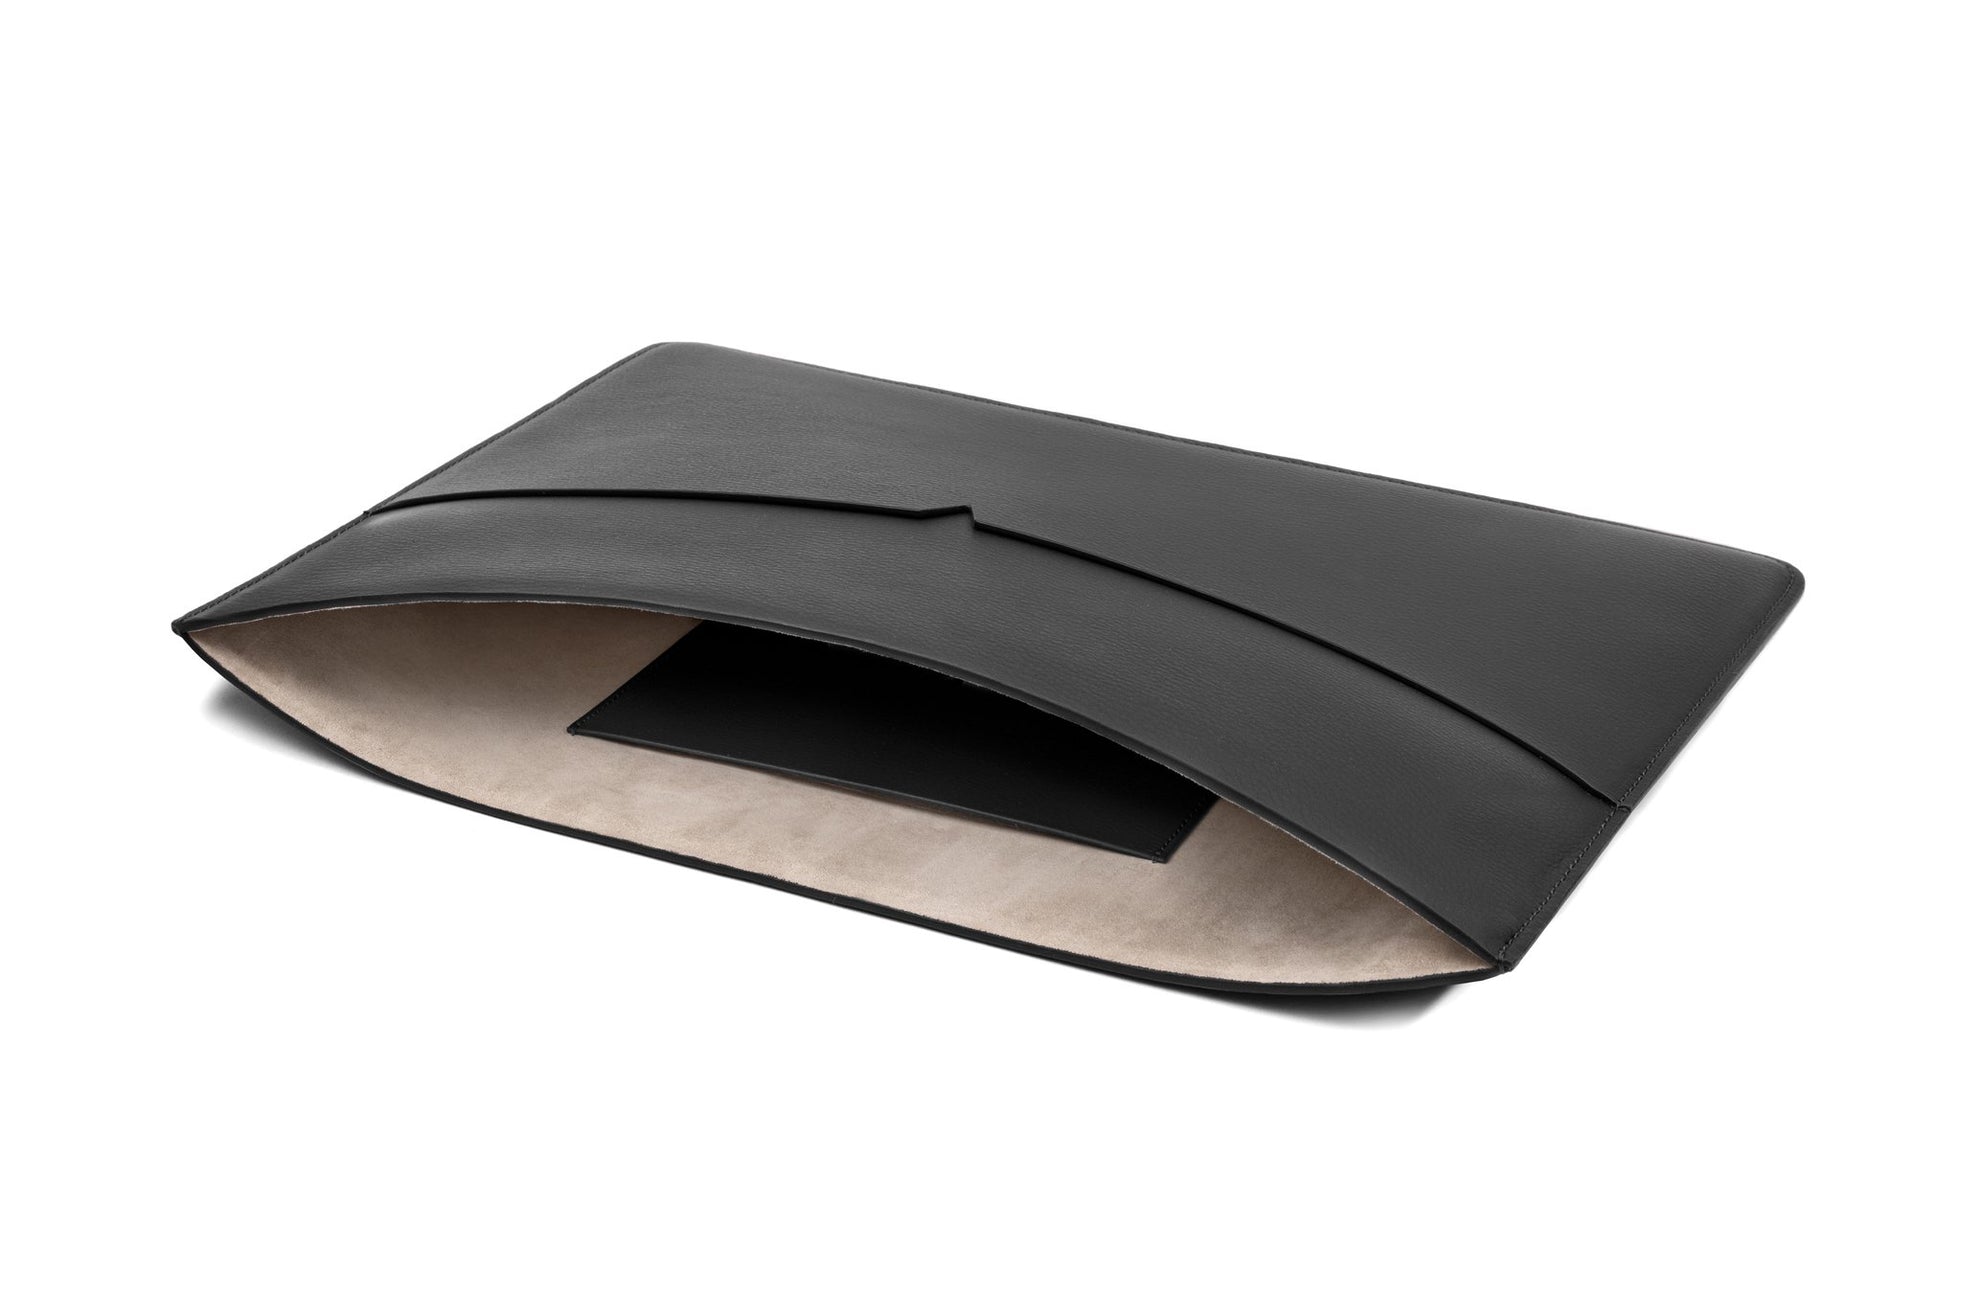 The MacBook Sleeve 13-inch - Sample Sale in Technik in Black image 5